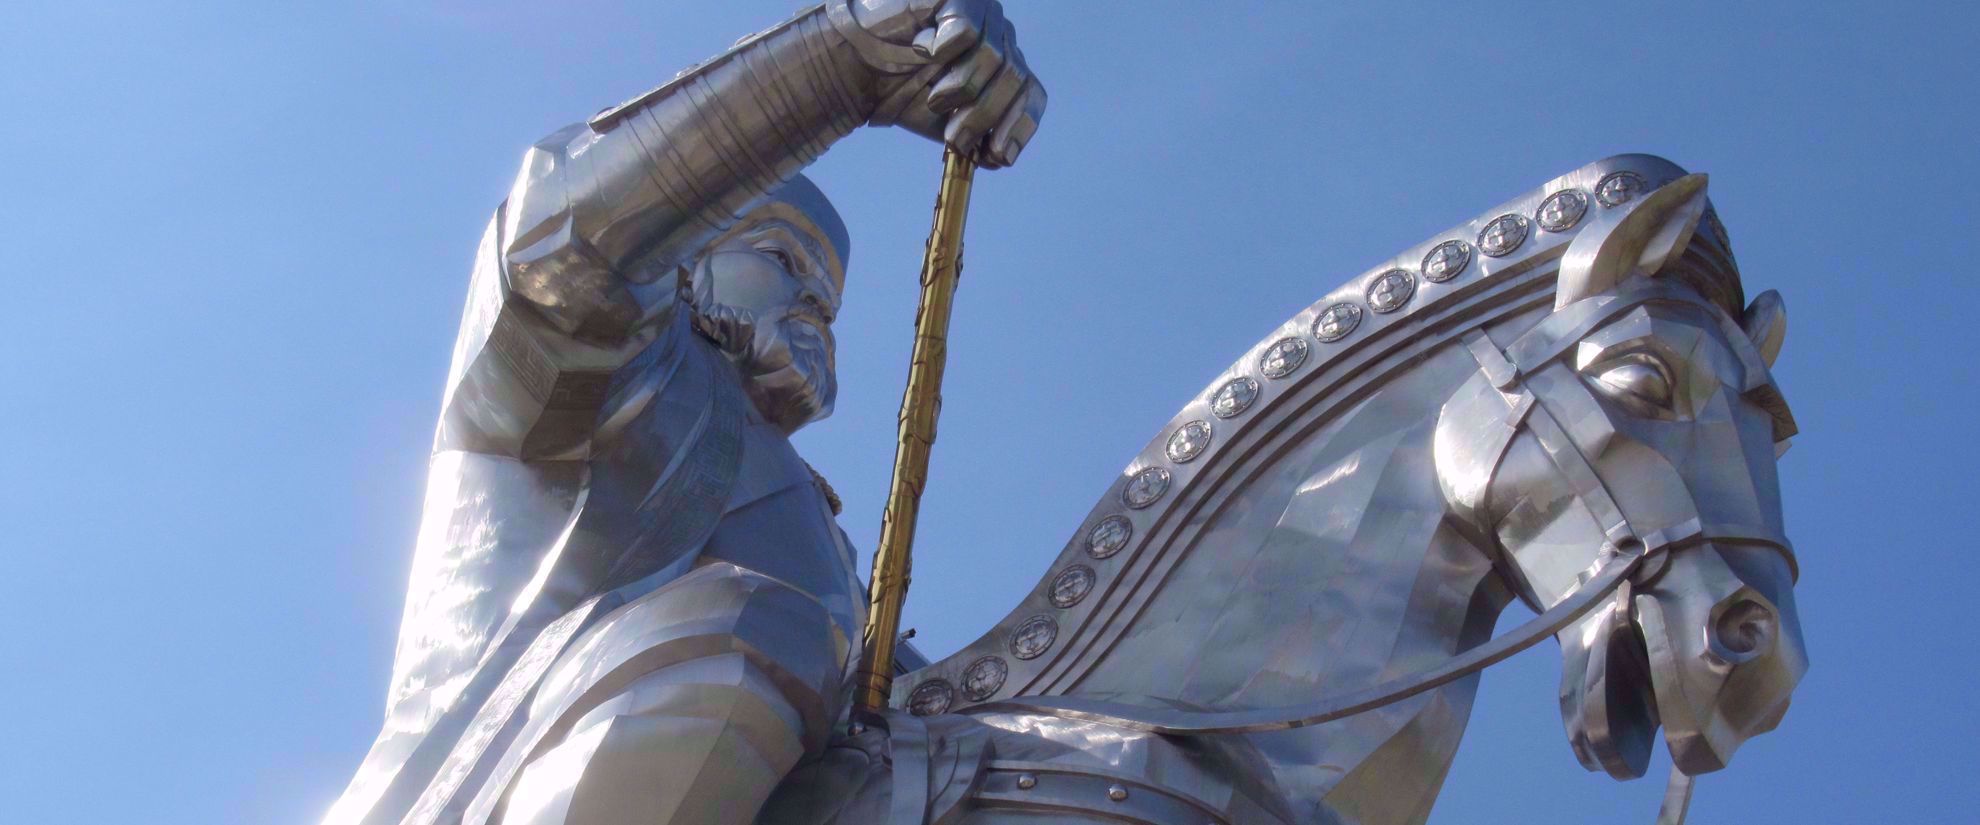 steel man on horse statue mongolia